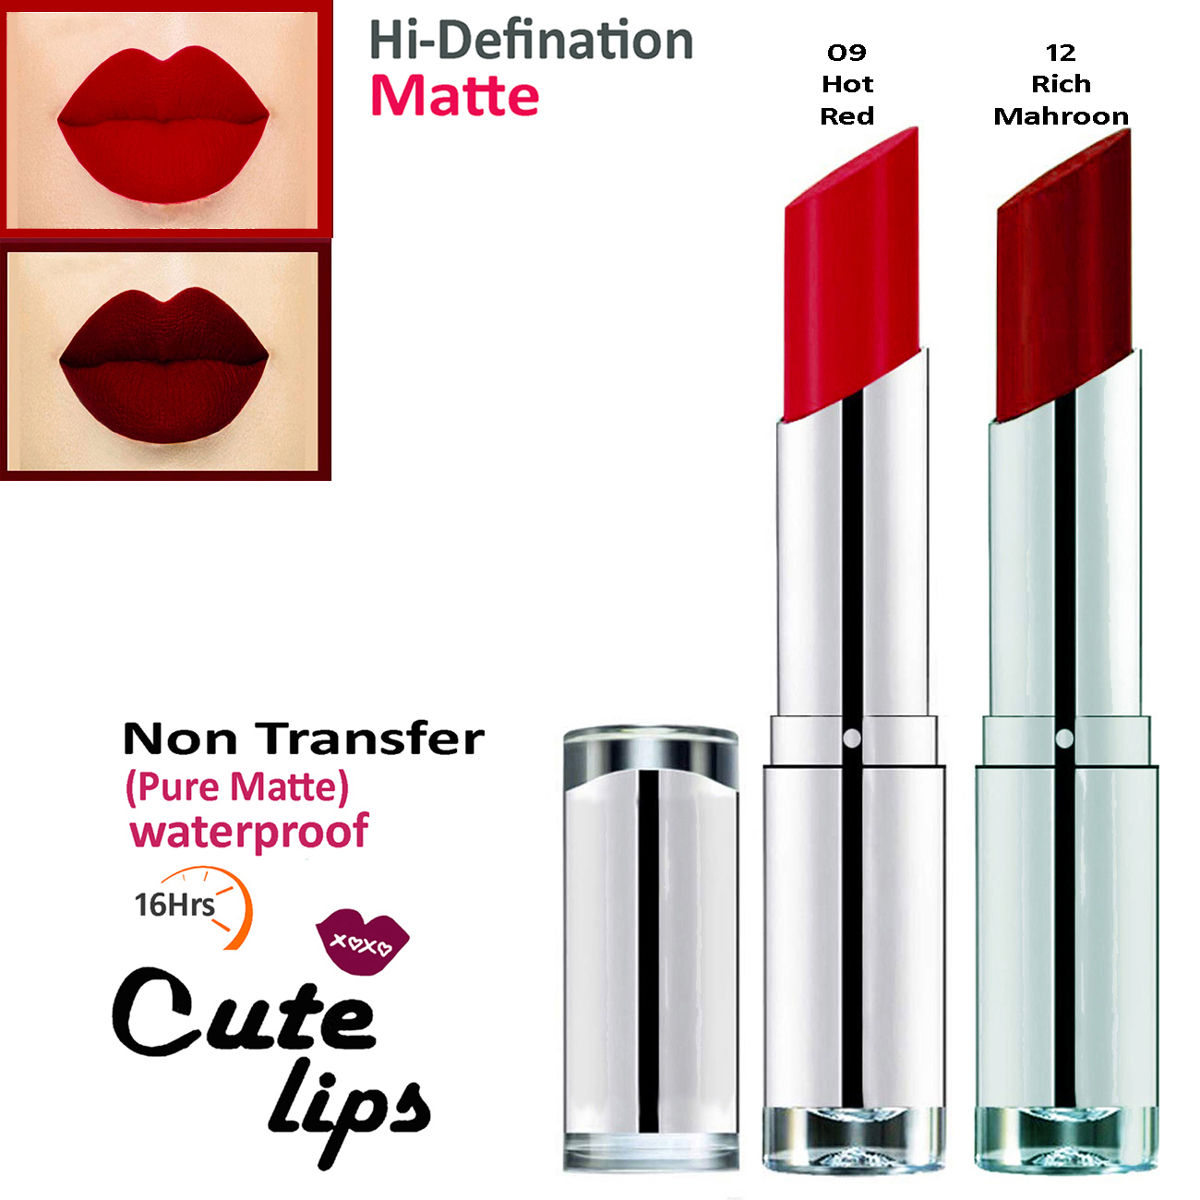 bq BLAQUE Cute Lips Non Transfer Matte Lipstick 2.4 gm each - 09 ...